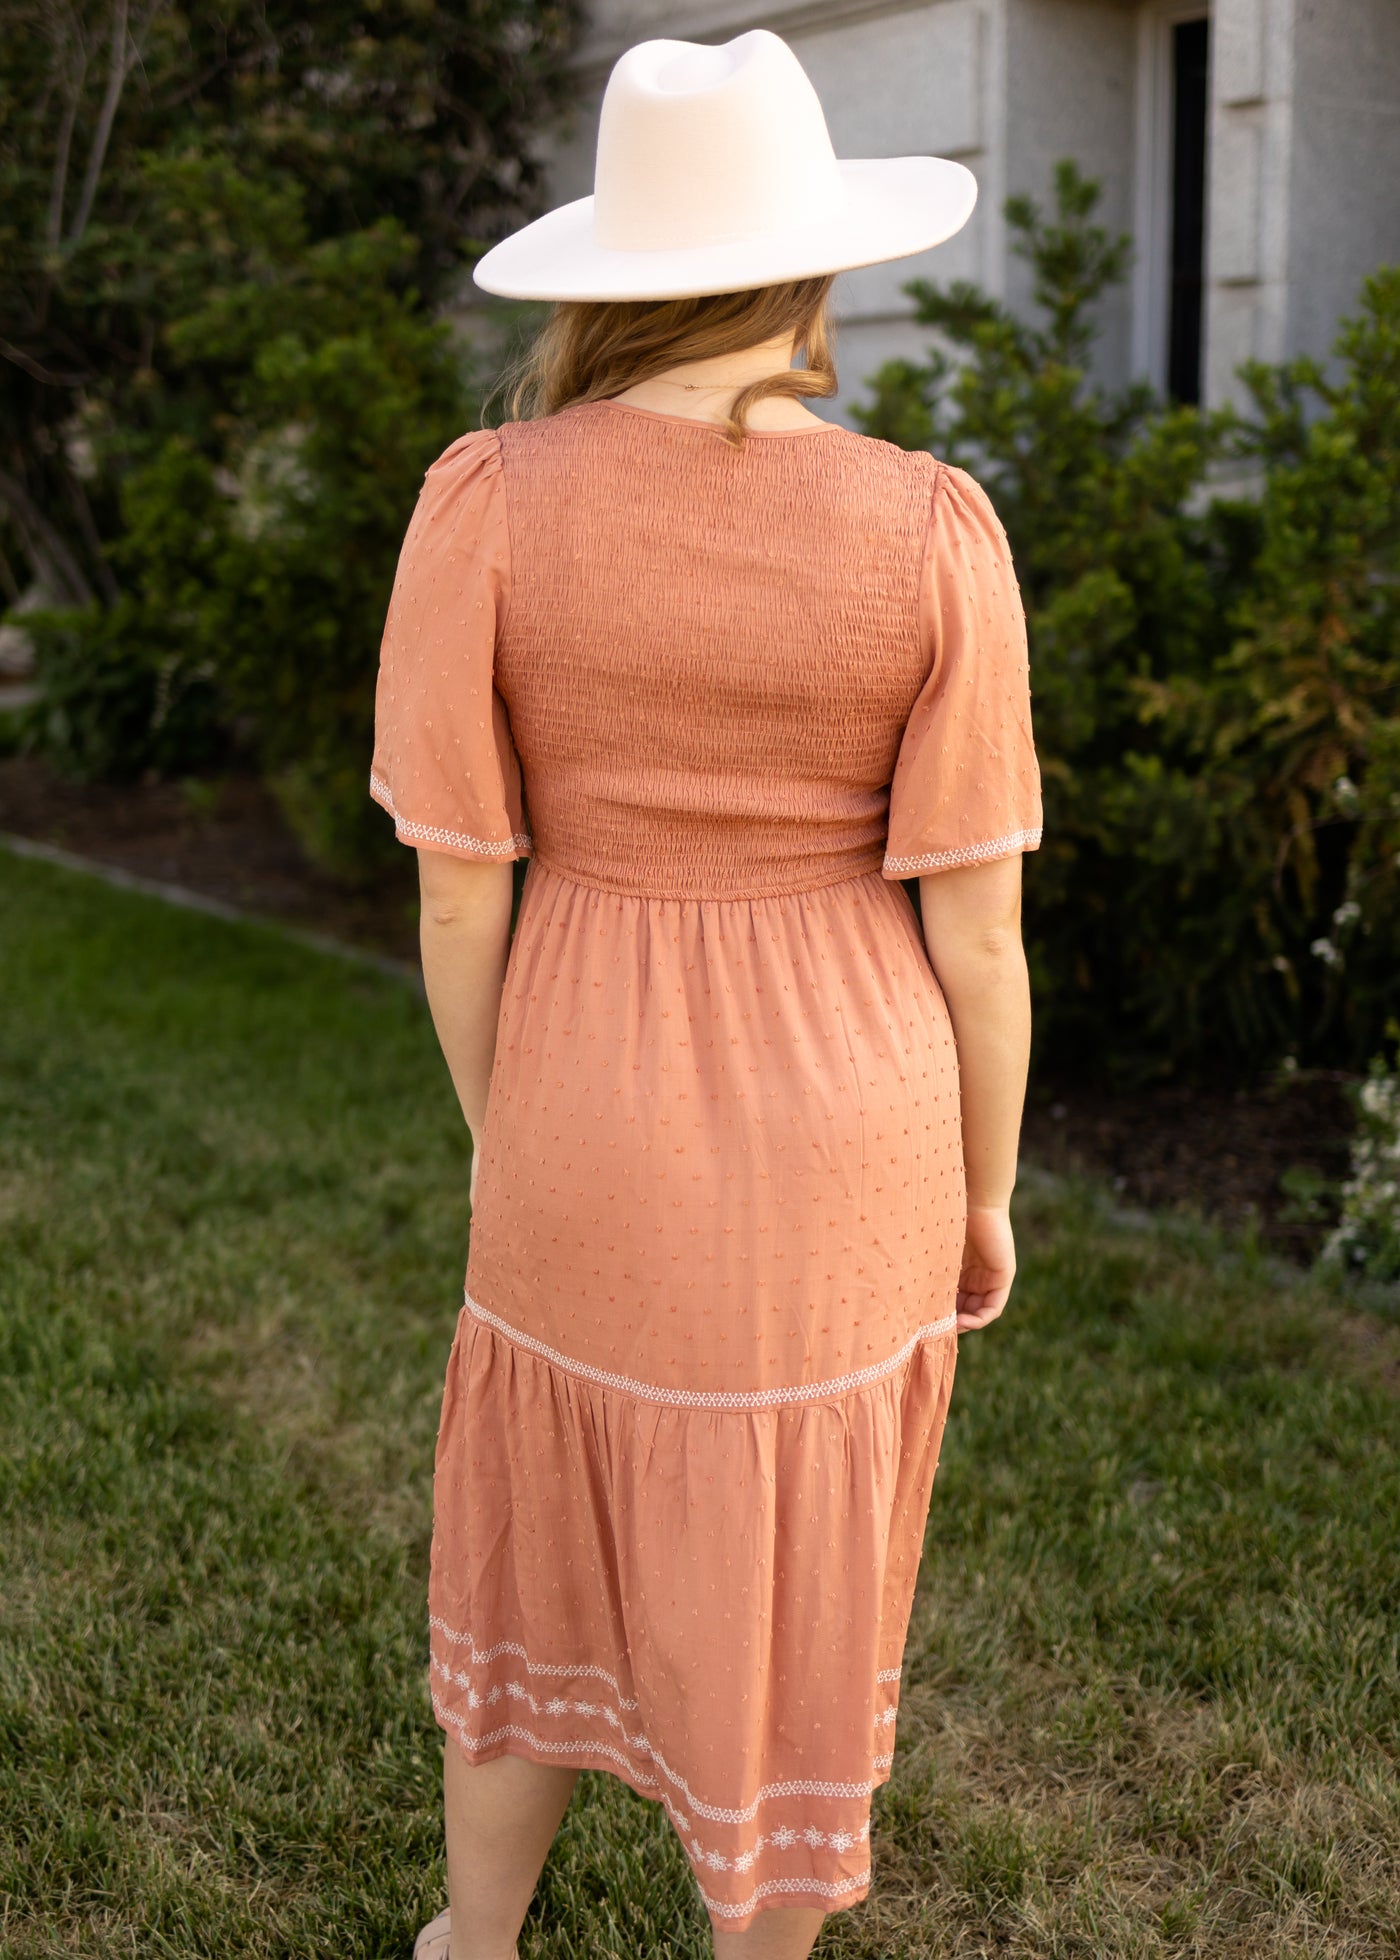 Back view of a short sleeve terracotta dress